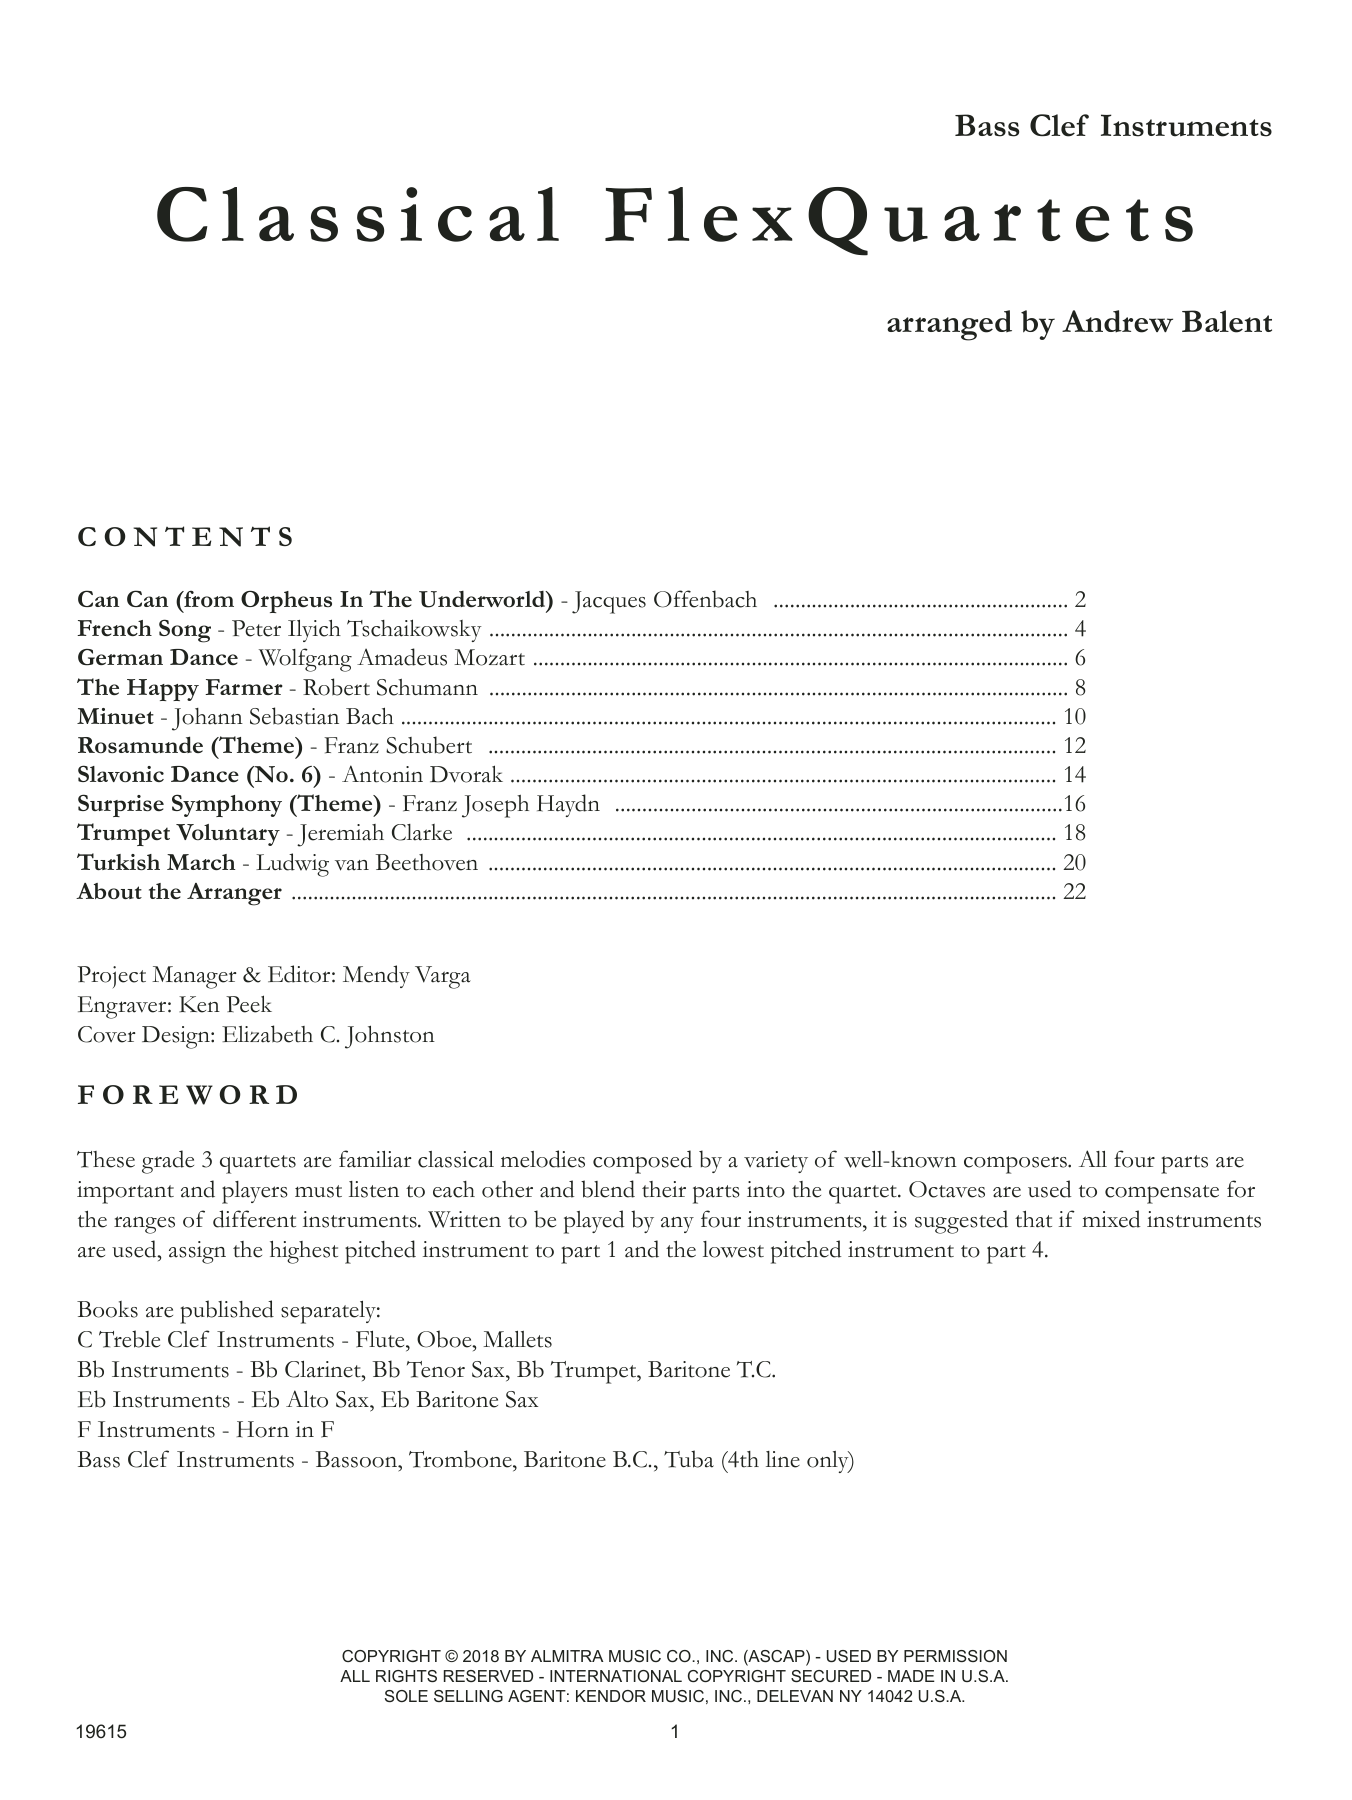 Download Andrew Balent Classical Flexquartets - Bass Clef Inst Sheet Music